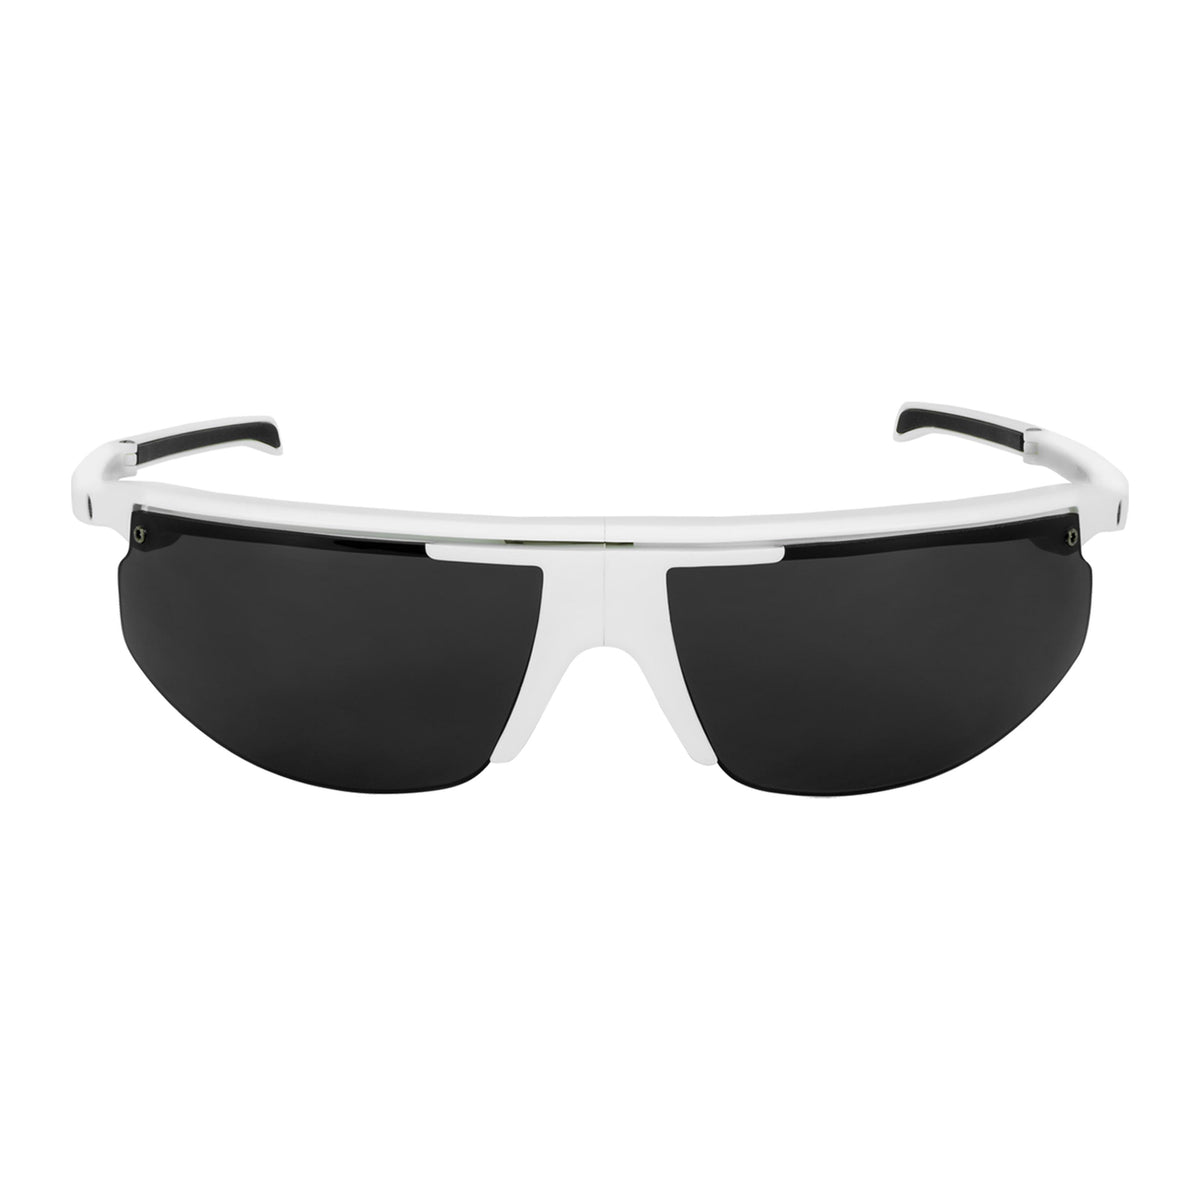 Popticals, Premium Compact Sunglasses, PopStar, 010040-WMGP, Polarized Sunglasses, Matte White Frame, Gray Lenses, Front View